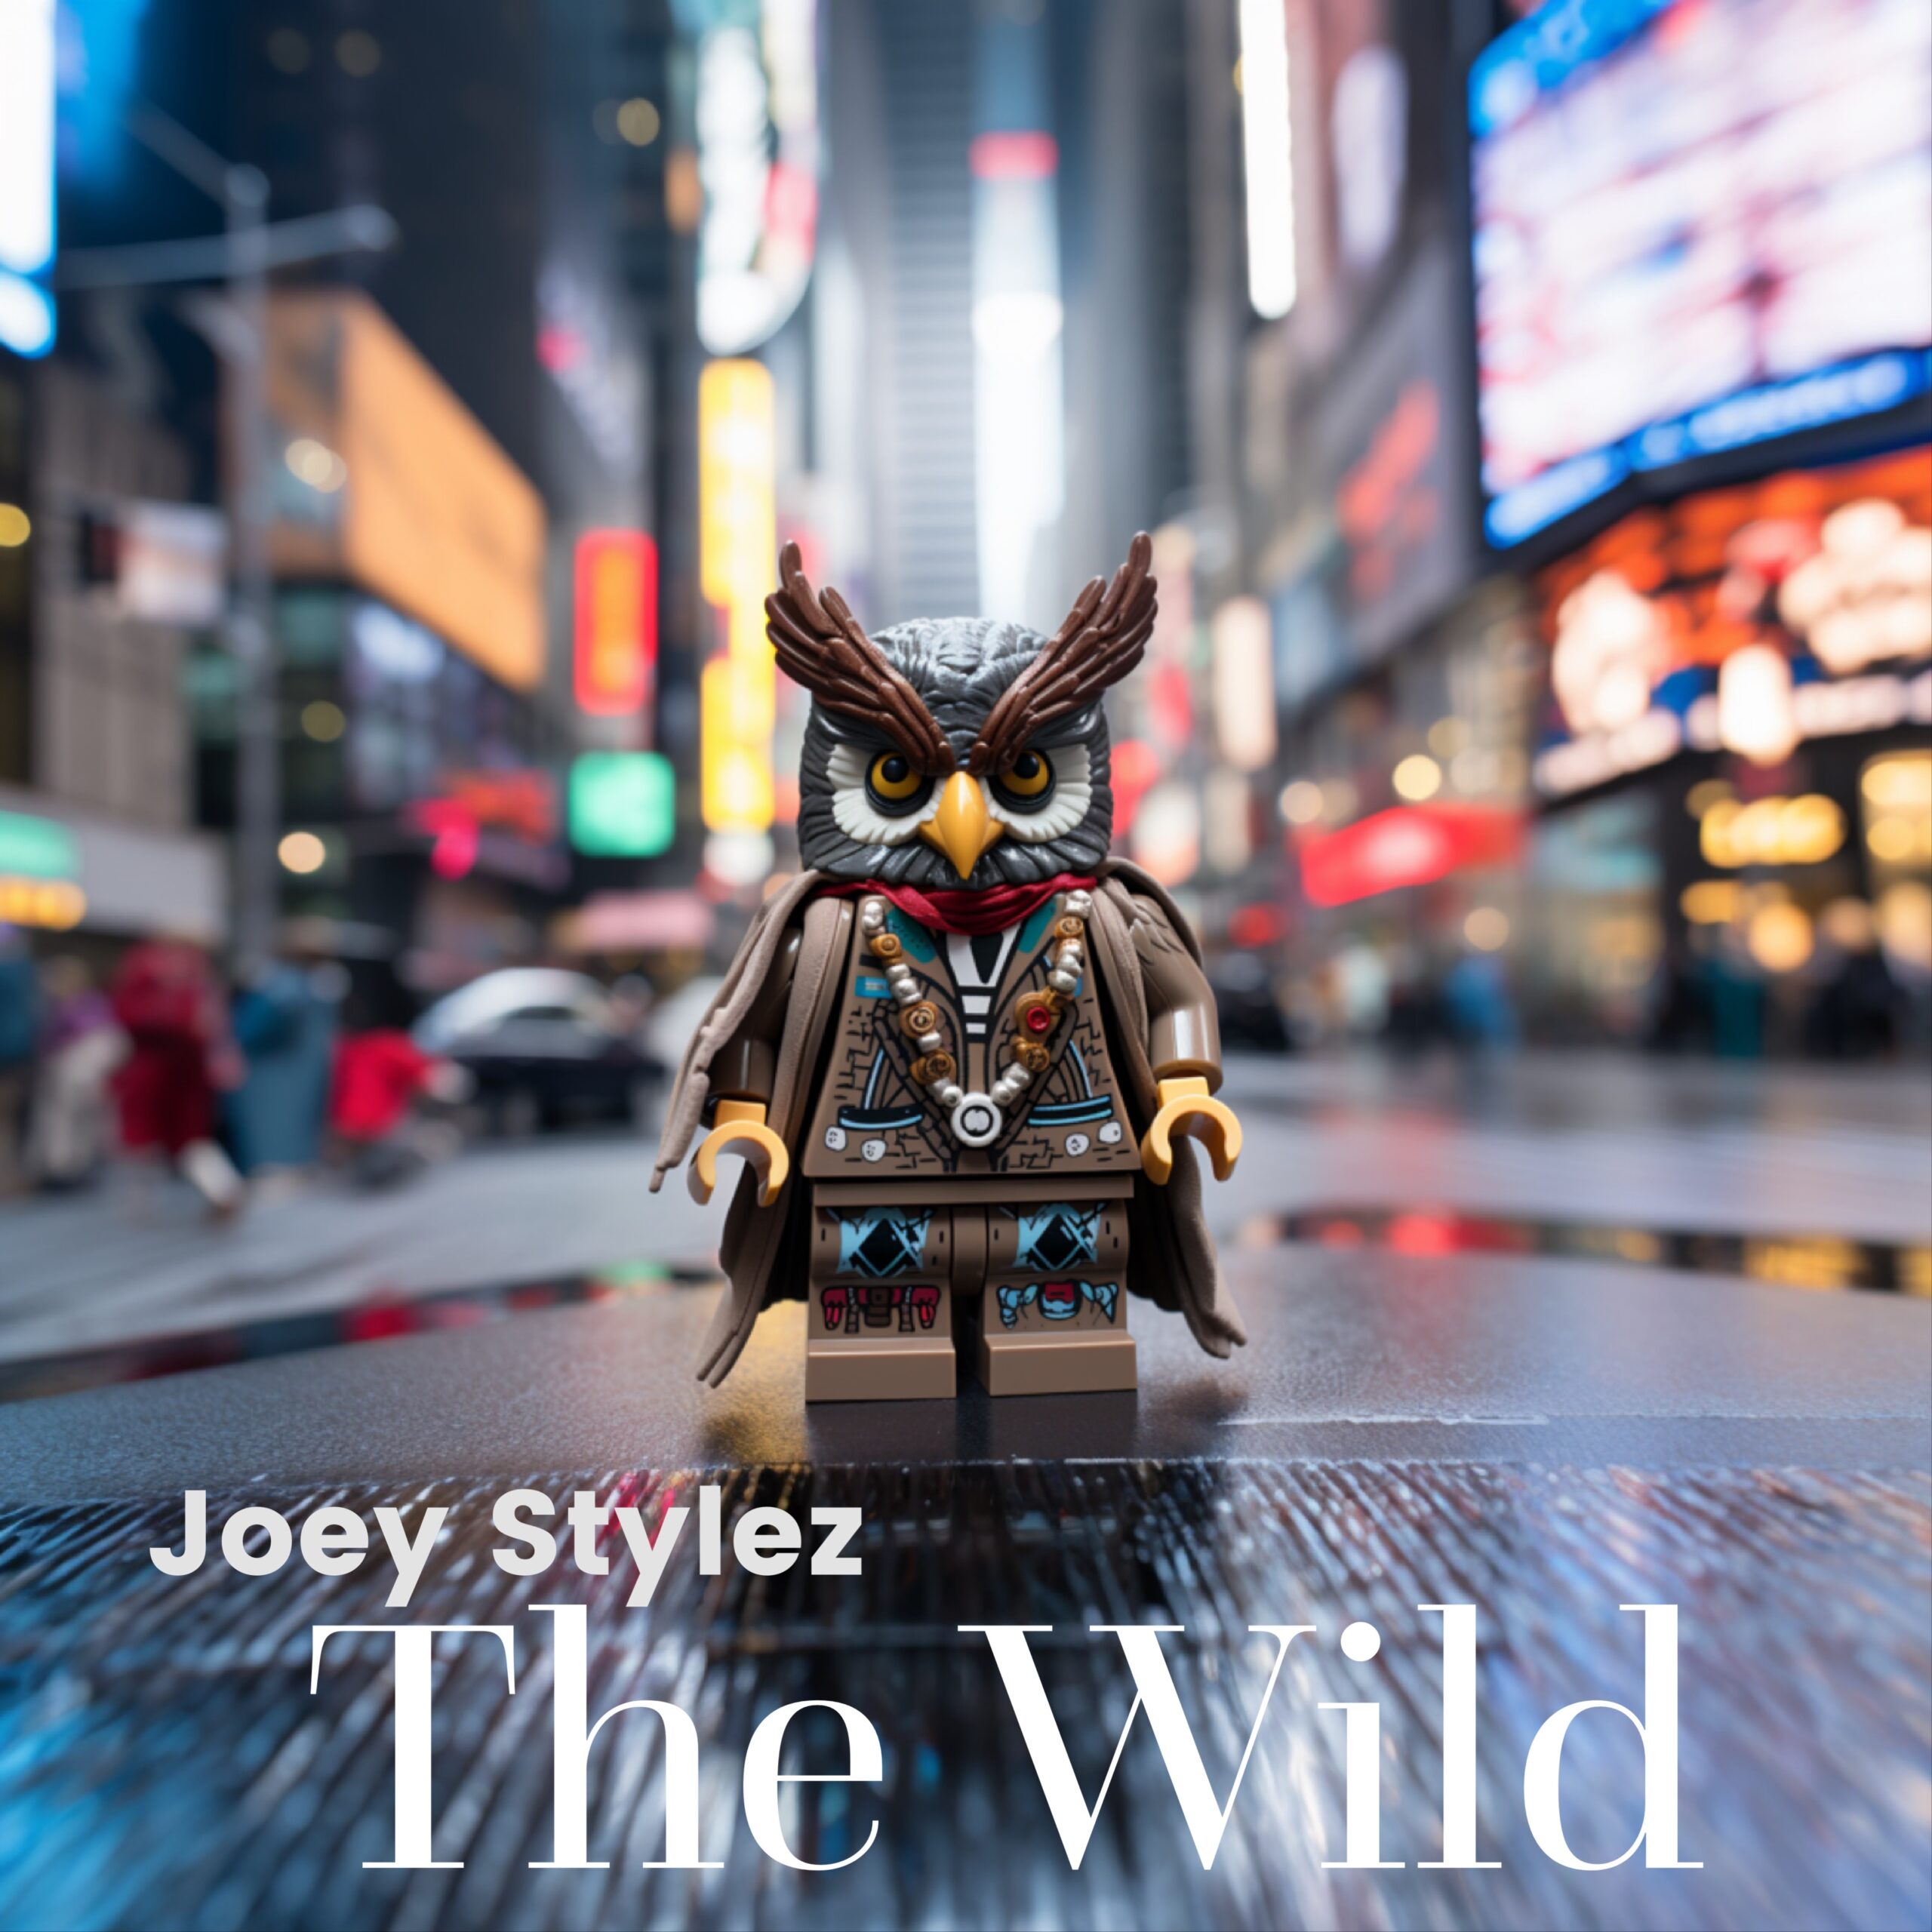 Joey Stylez ‘The Wild’ single artwork